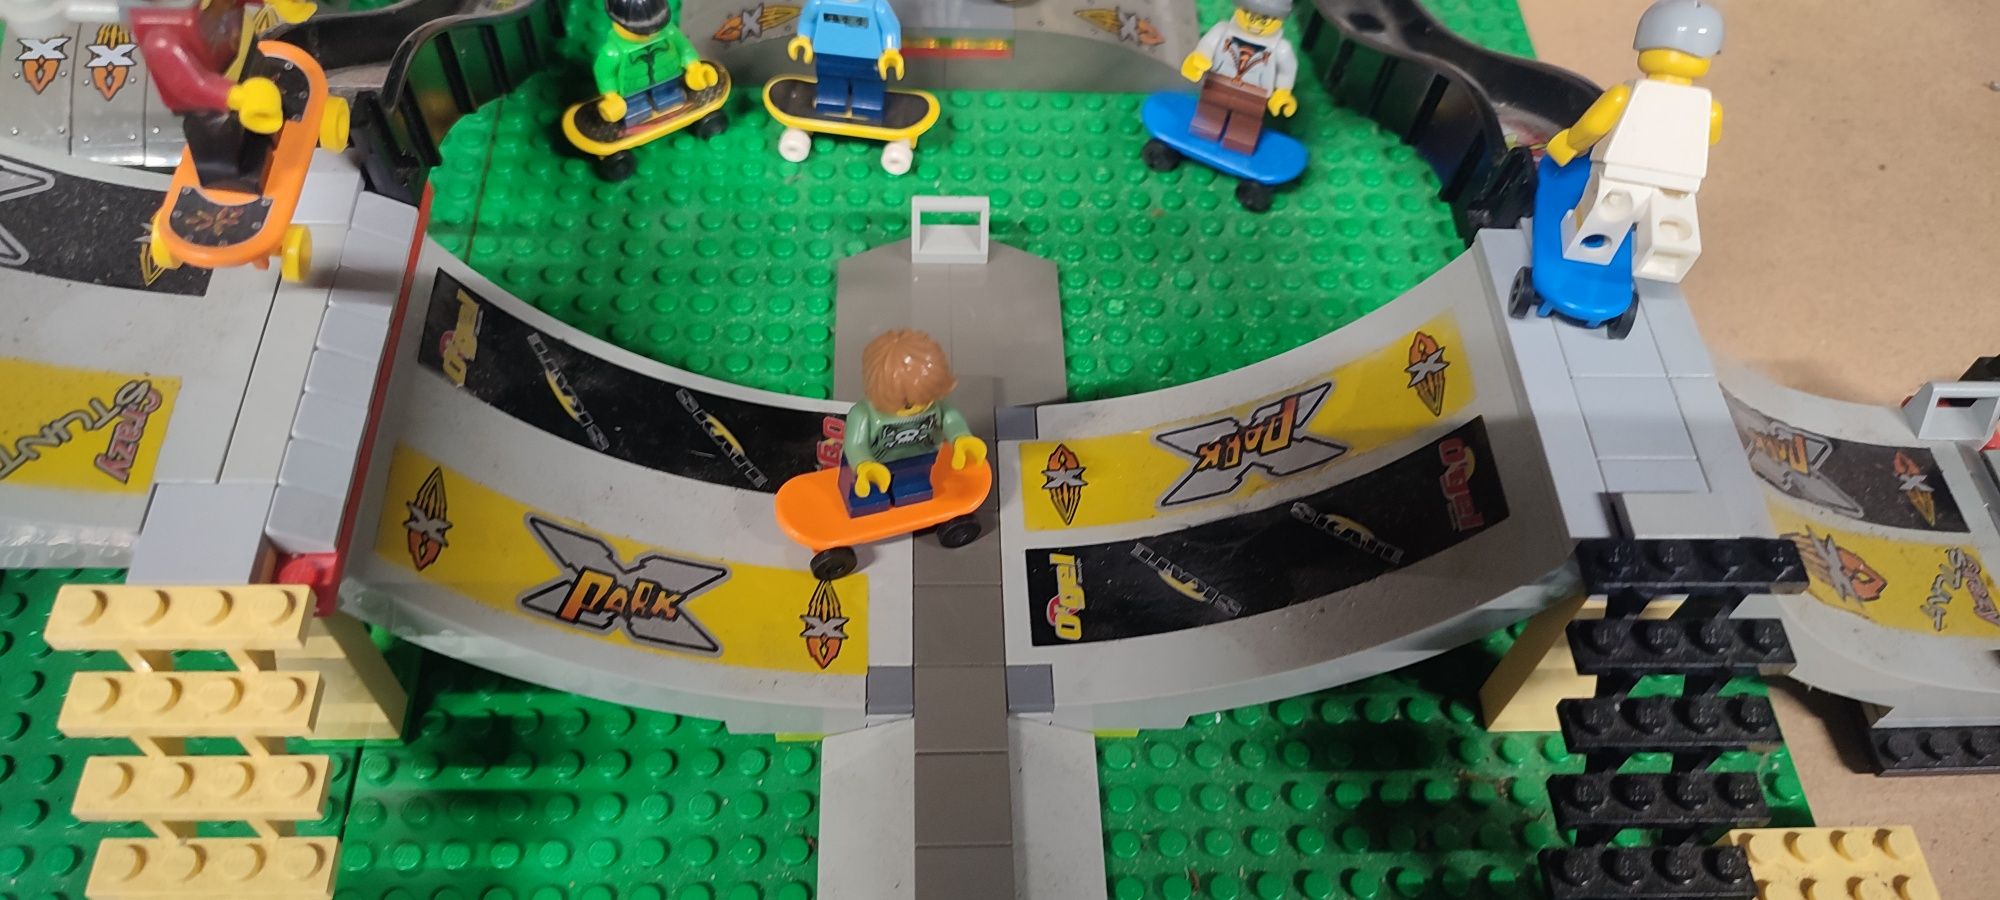 LEGO skate park 6734,6737,6738